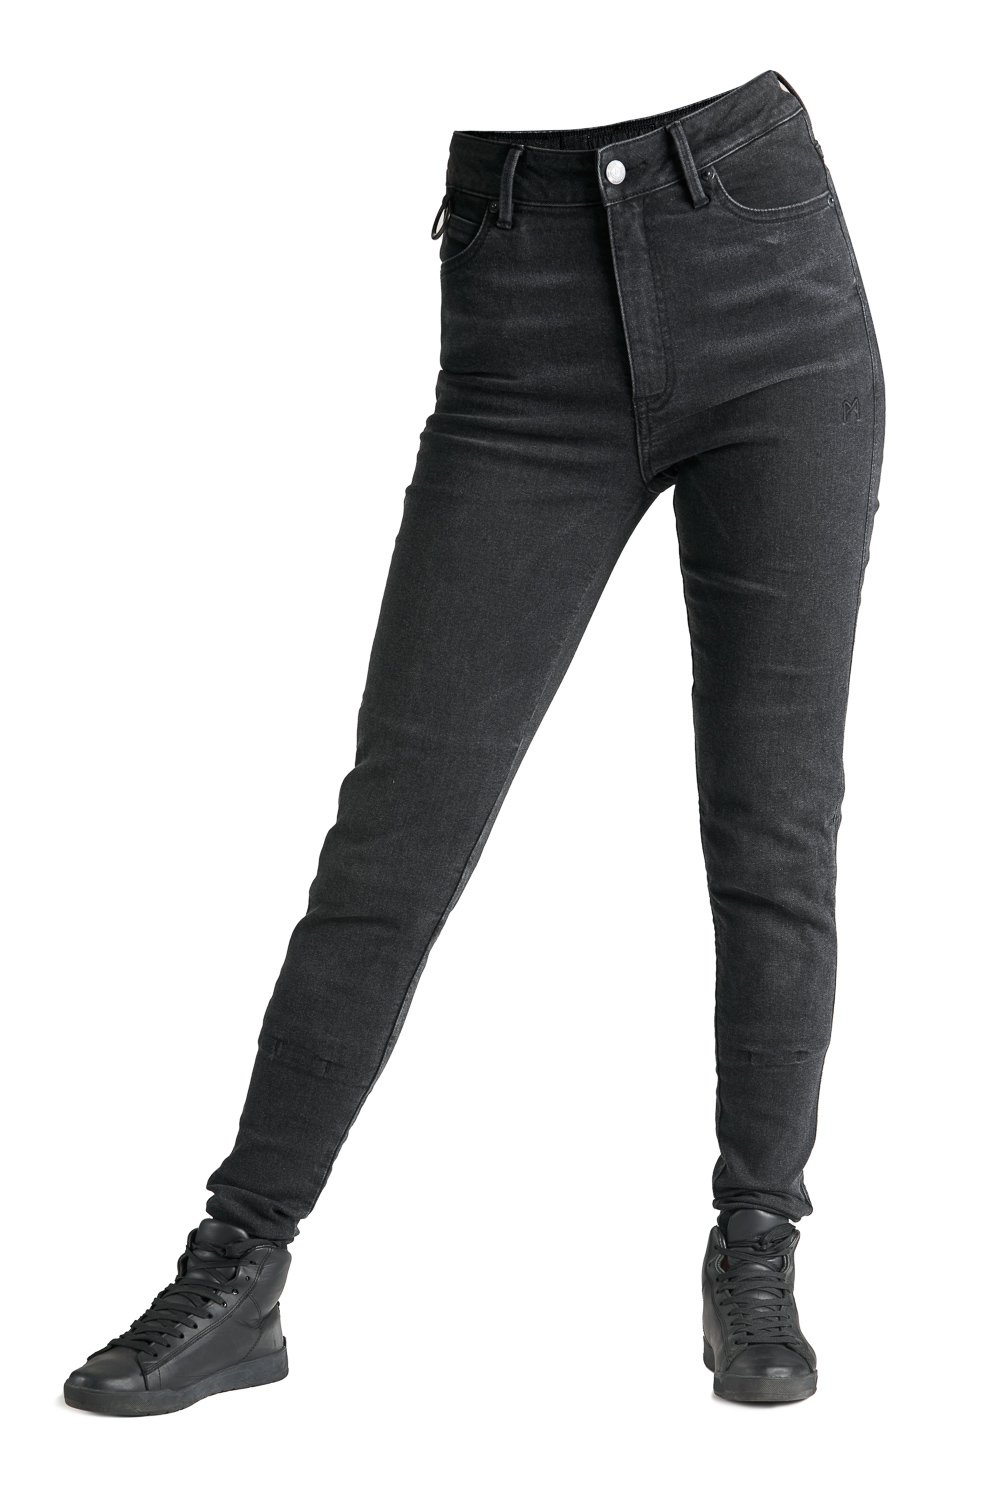 Image of EU Pando Moto Kusari Cor 01 Women Skinny-Fit Cordura Pantalon Taille W24/L32